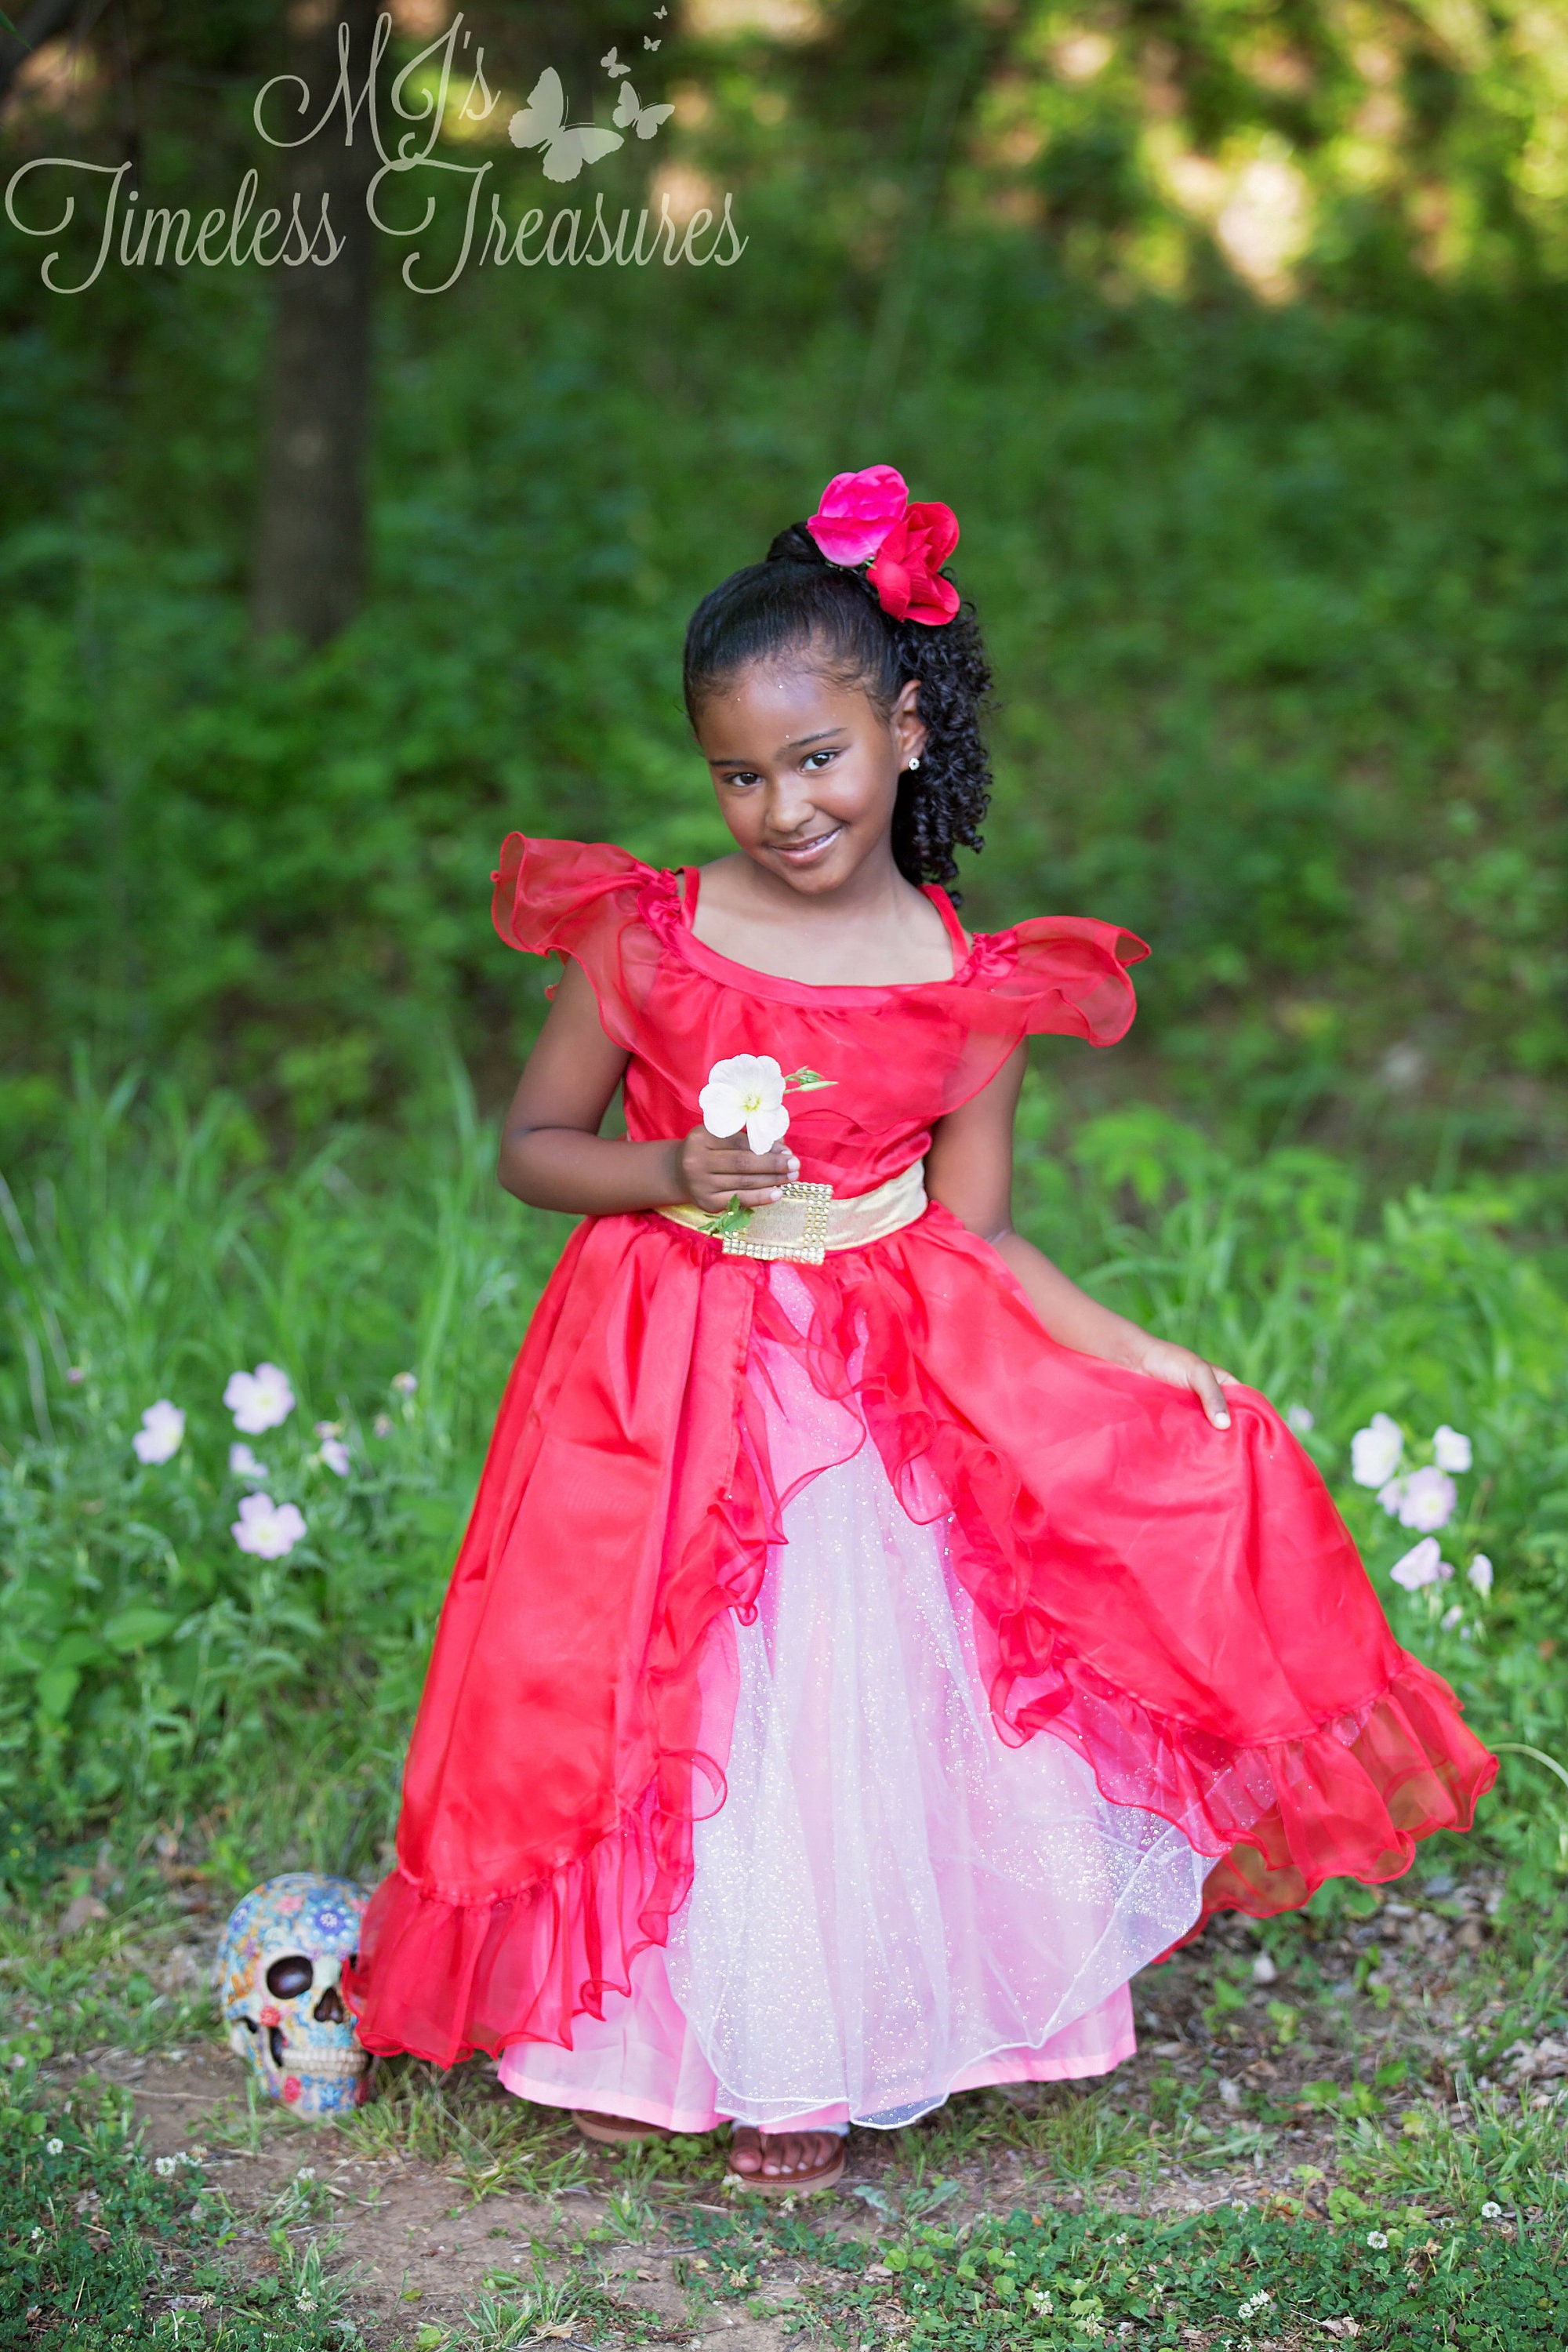 Princess Ariel in red dress and brown hair - putri disney fan Art  (38746180) - fanpop